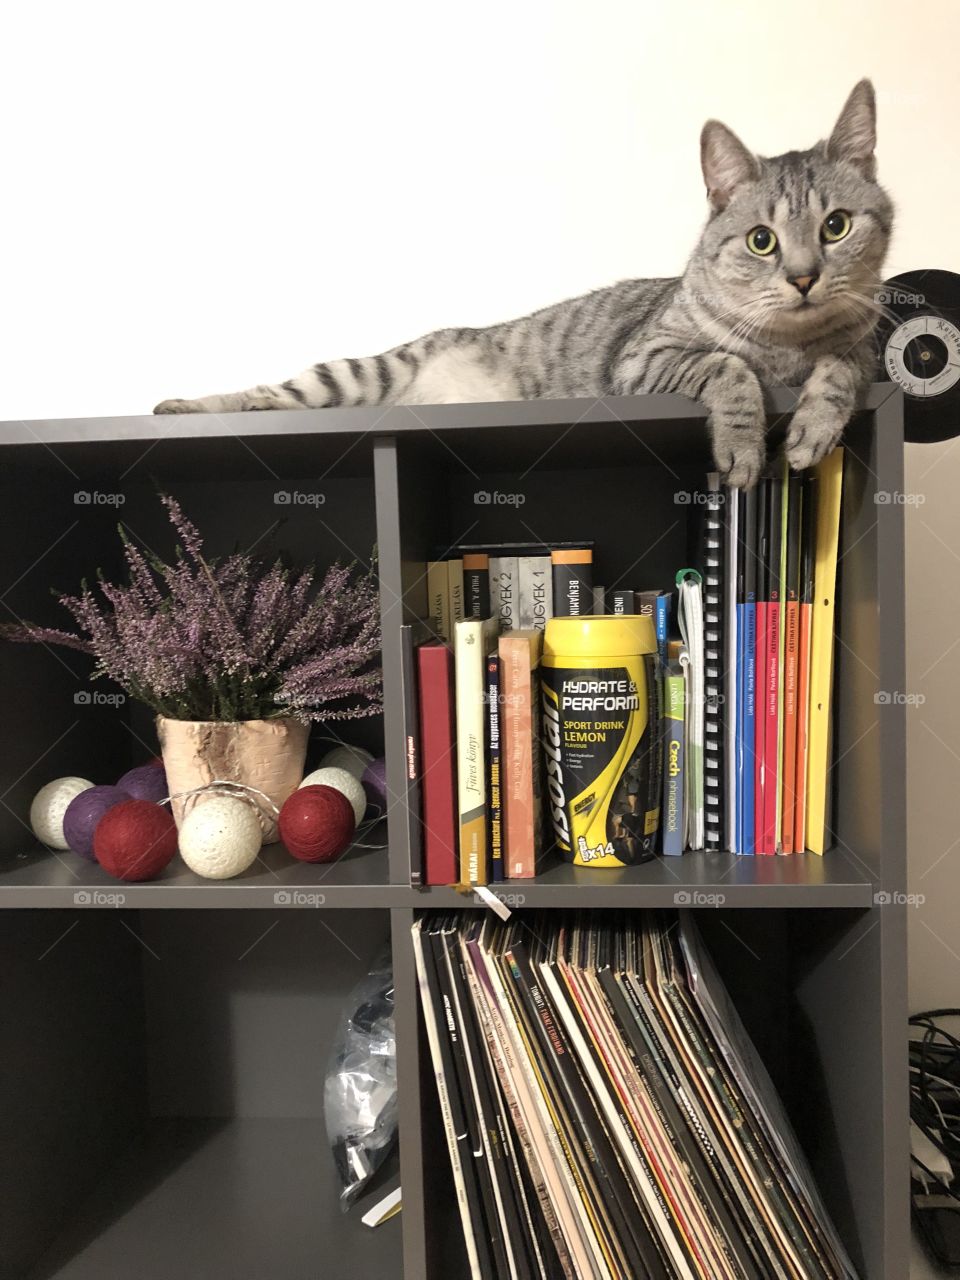 Cute cat hanging on the shelf 